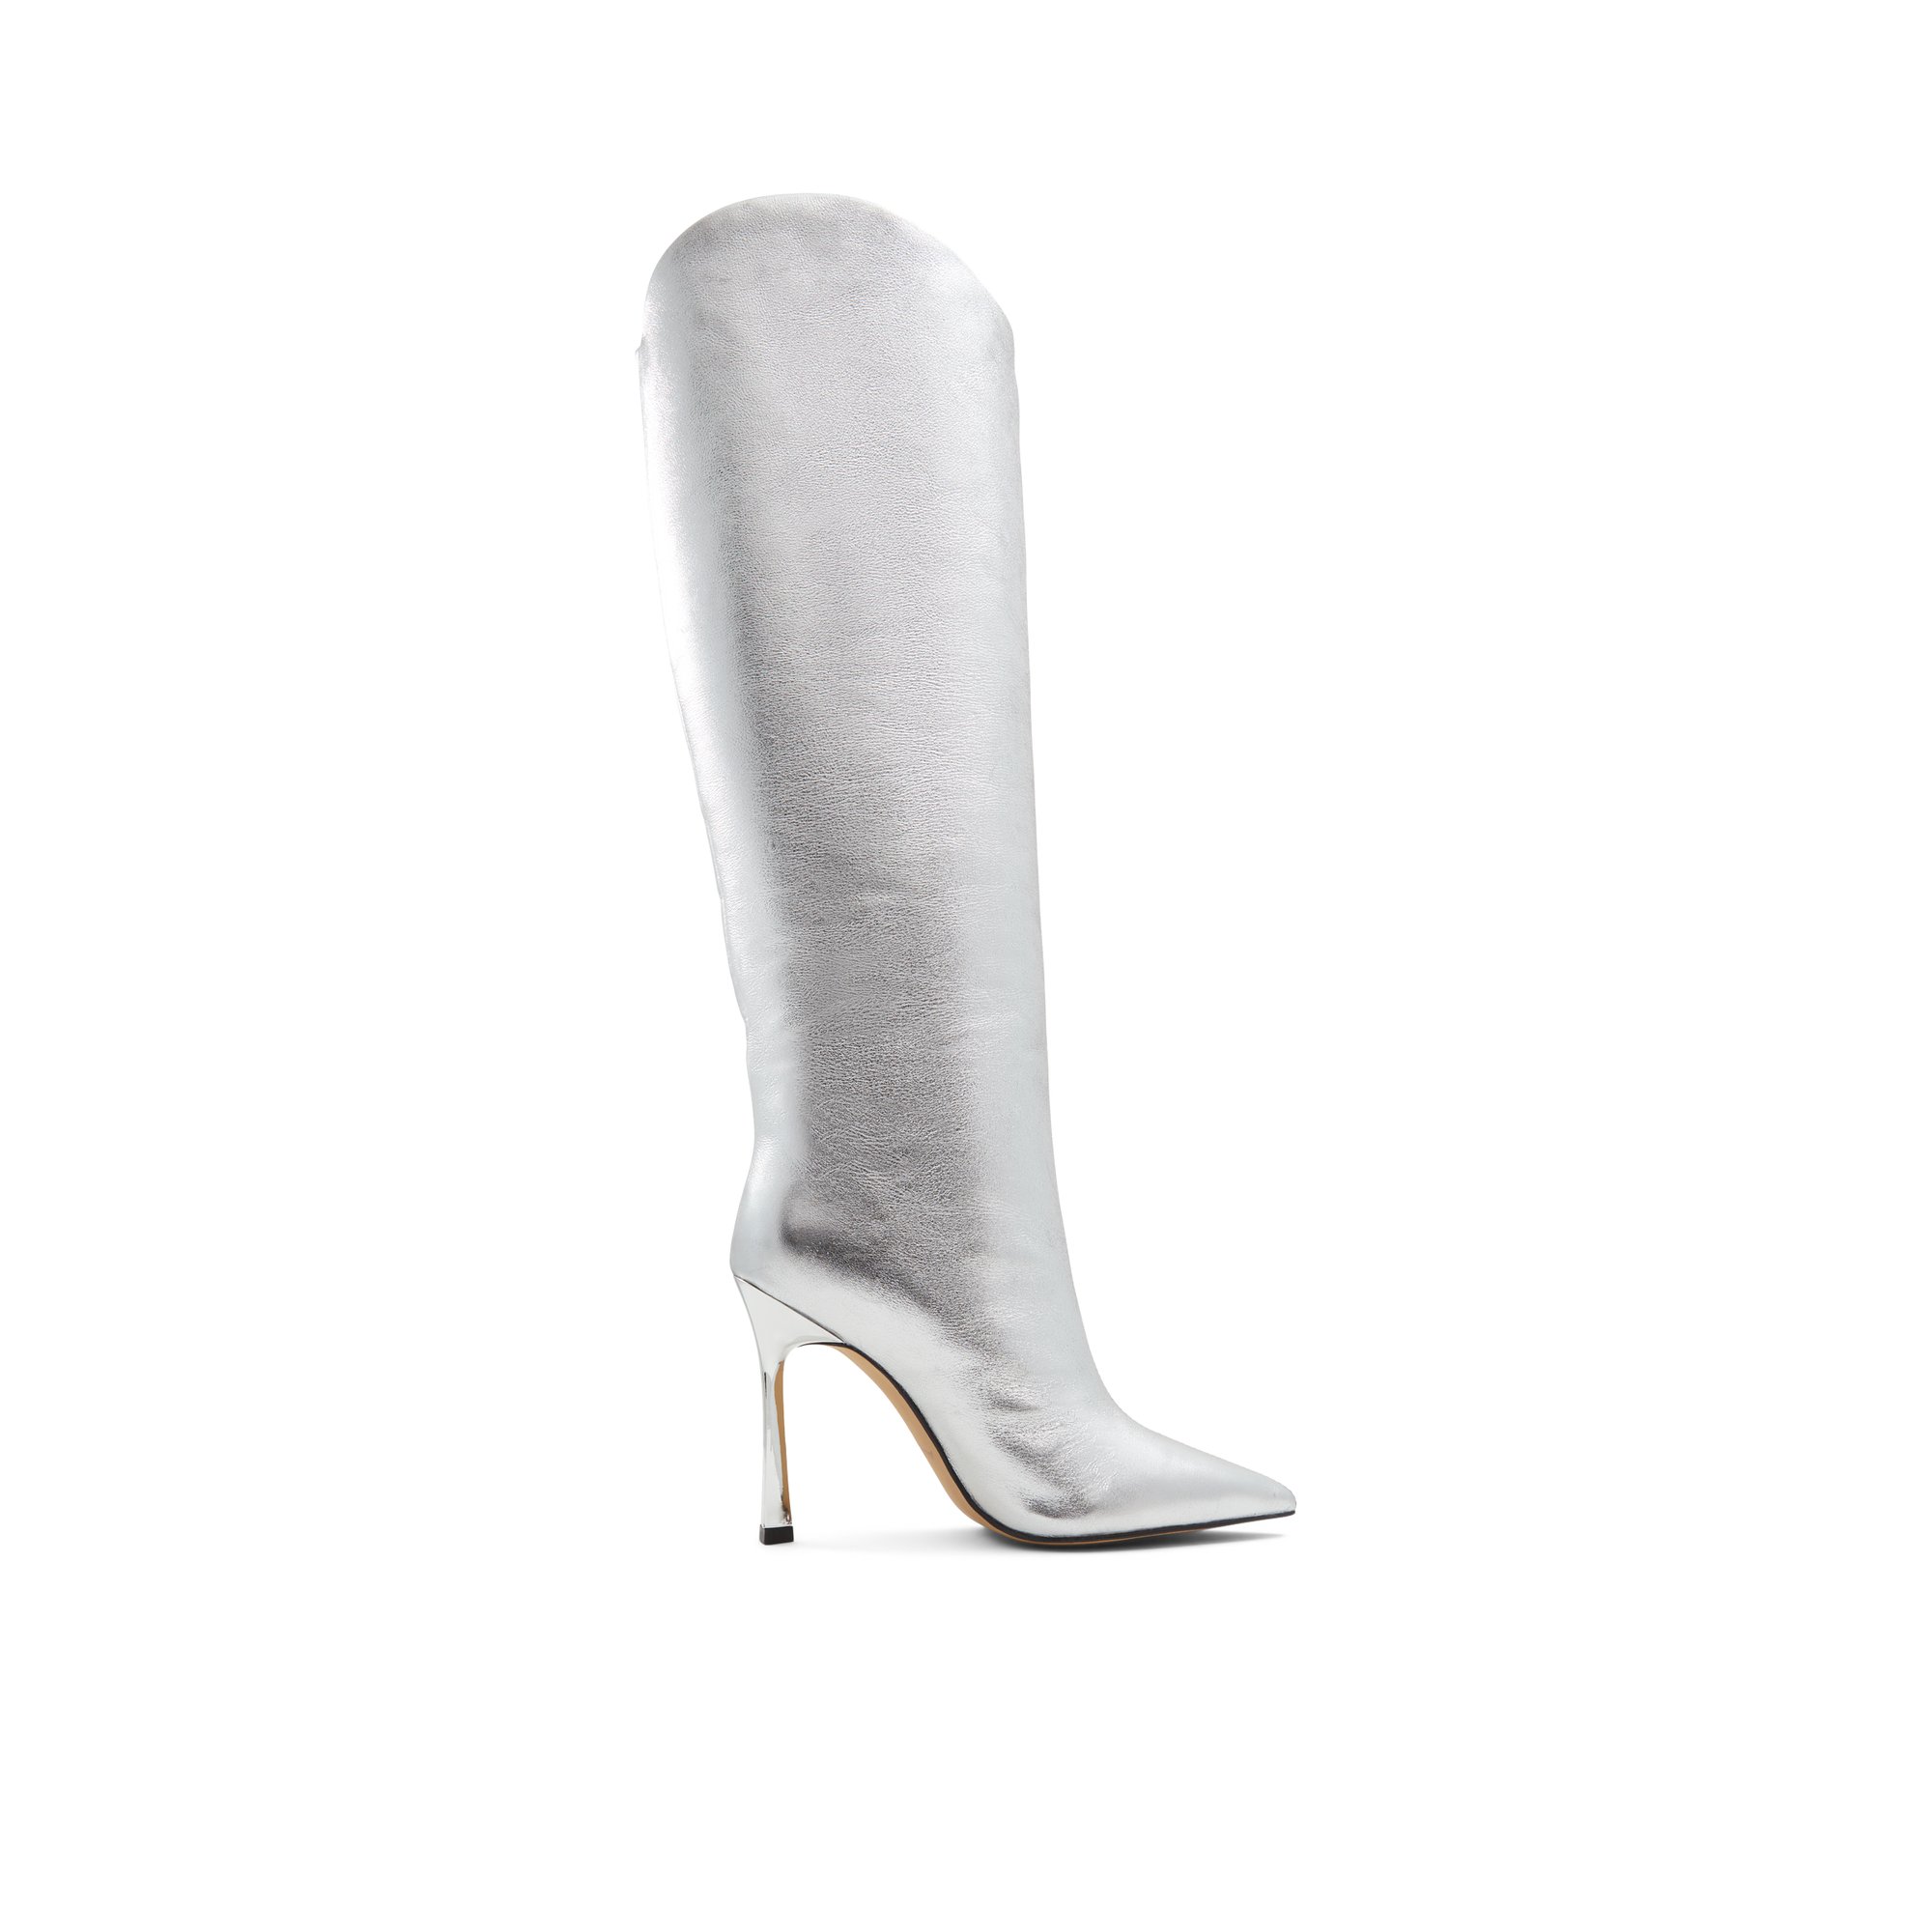 ALDO Devondra - Women's Boots Dress - Silver